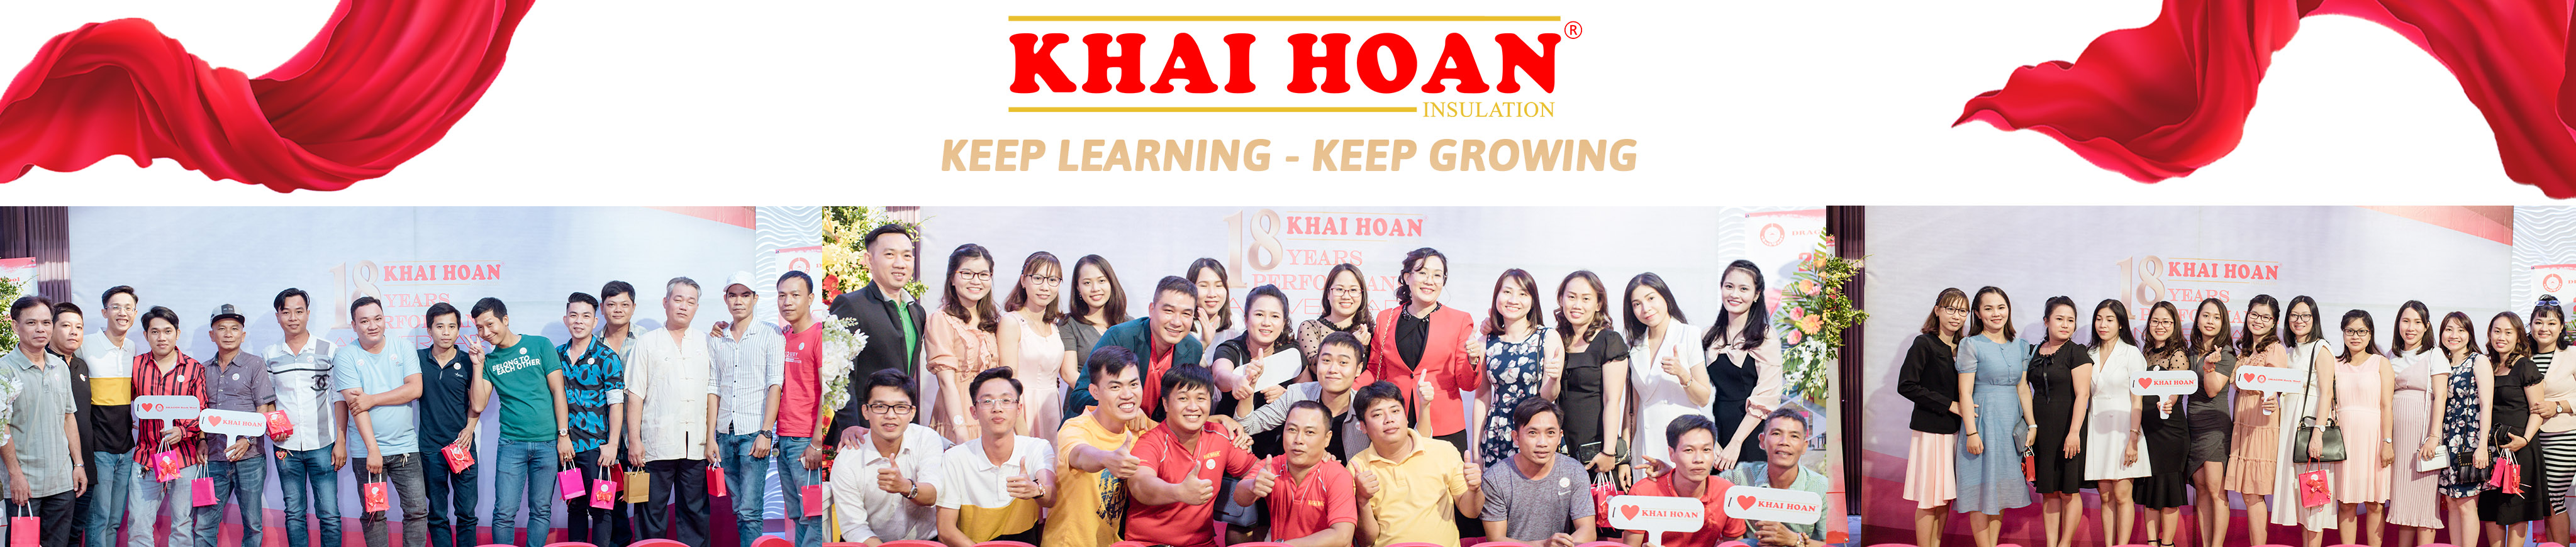 Khai Hoan Insulation Group